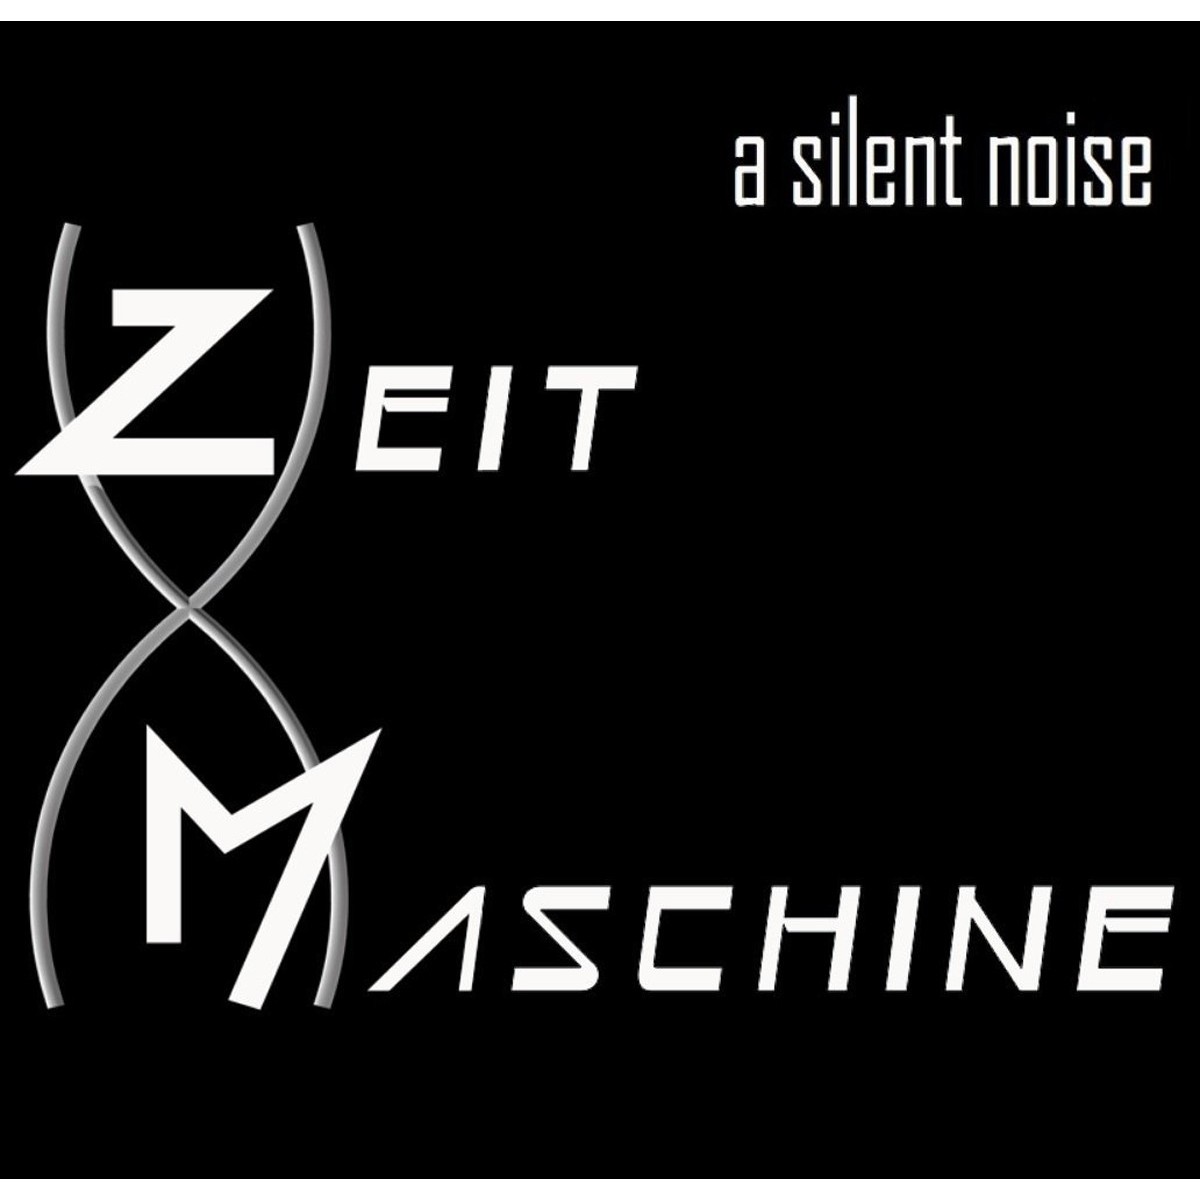 A Silent Noise - Zeit Maschine